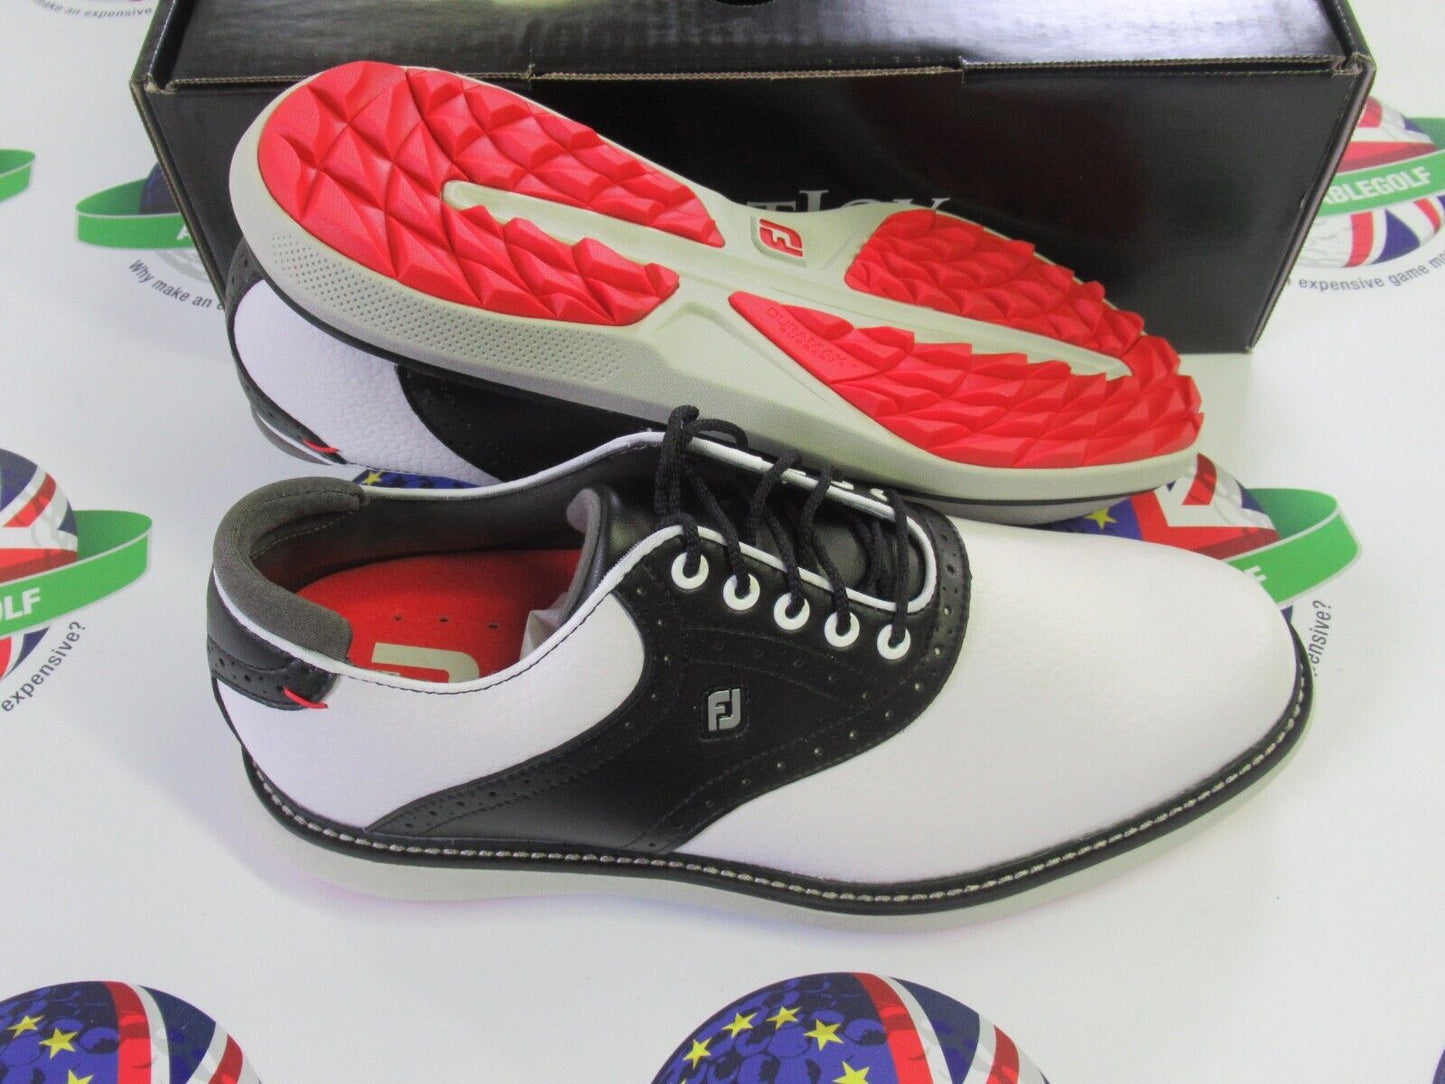 footjoy traditions waterproof golf shoes 57924k white/black uk size 7 medium